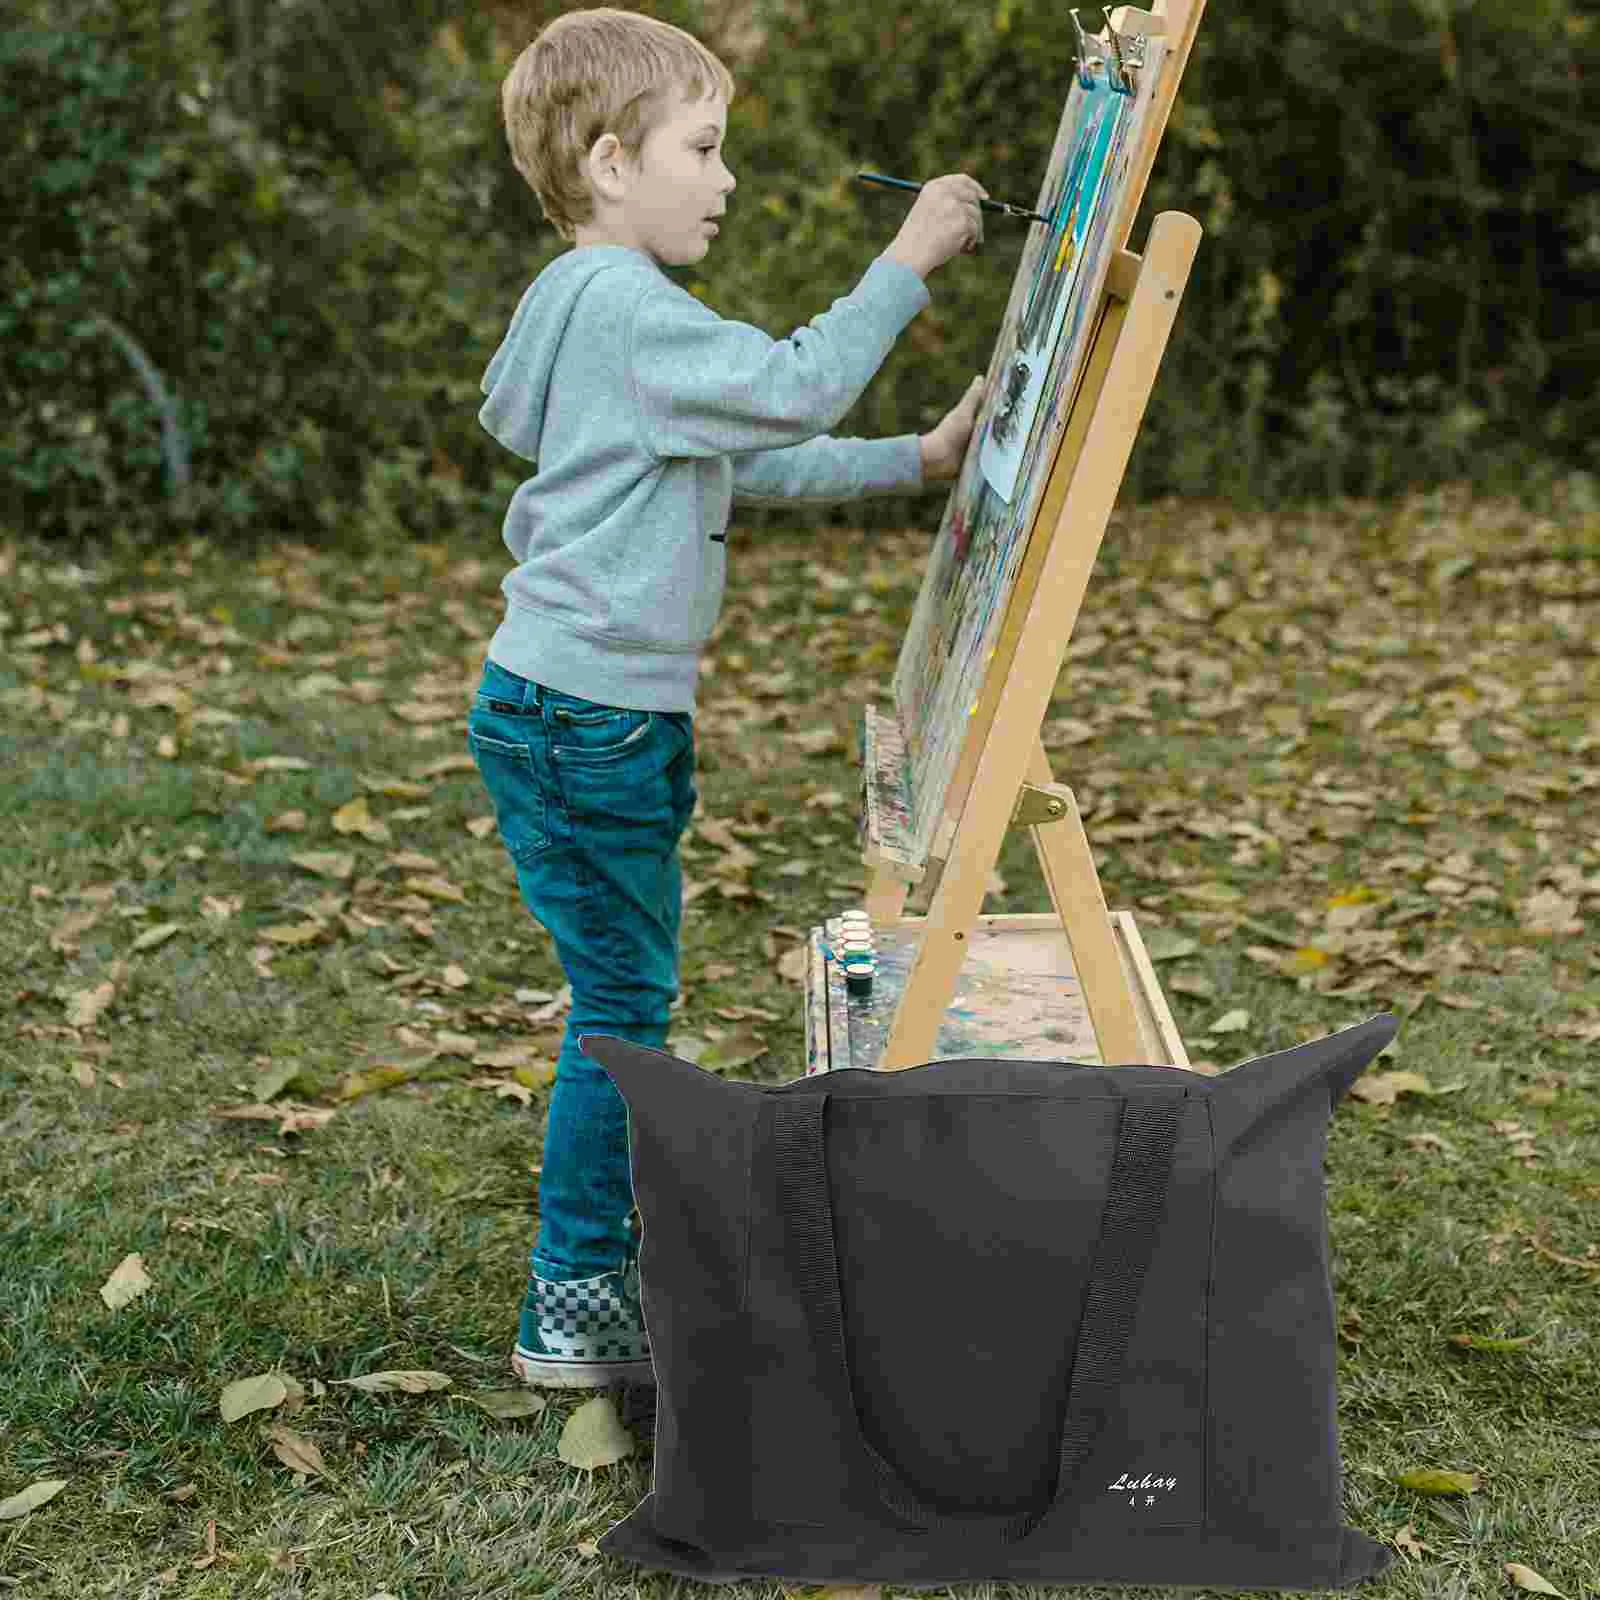 A3 Art Portfolio Waterproof Art Portfolio Bag Drawing Board Bag